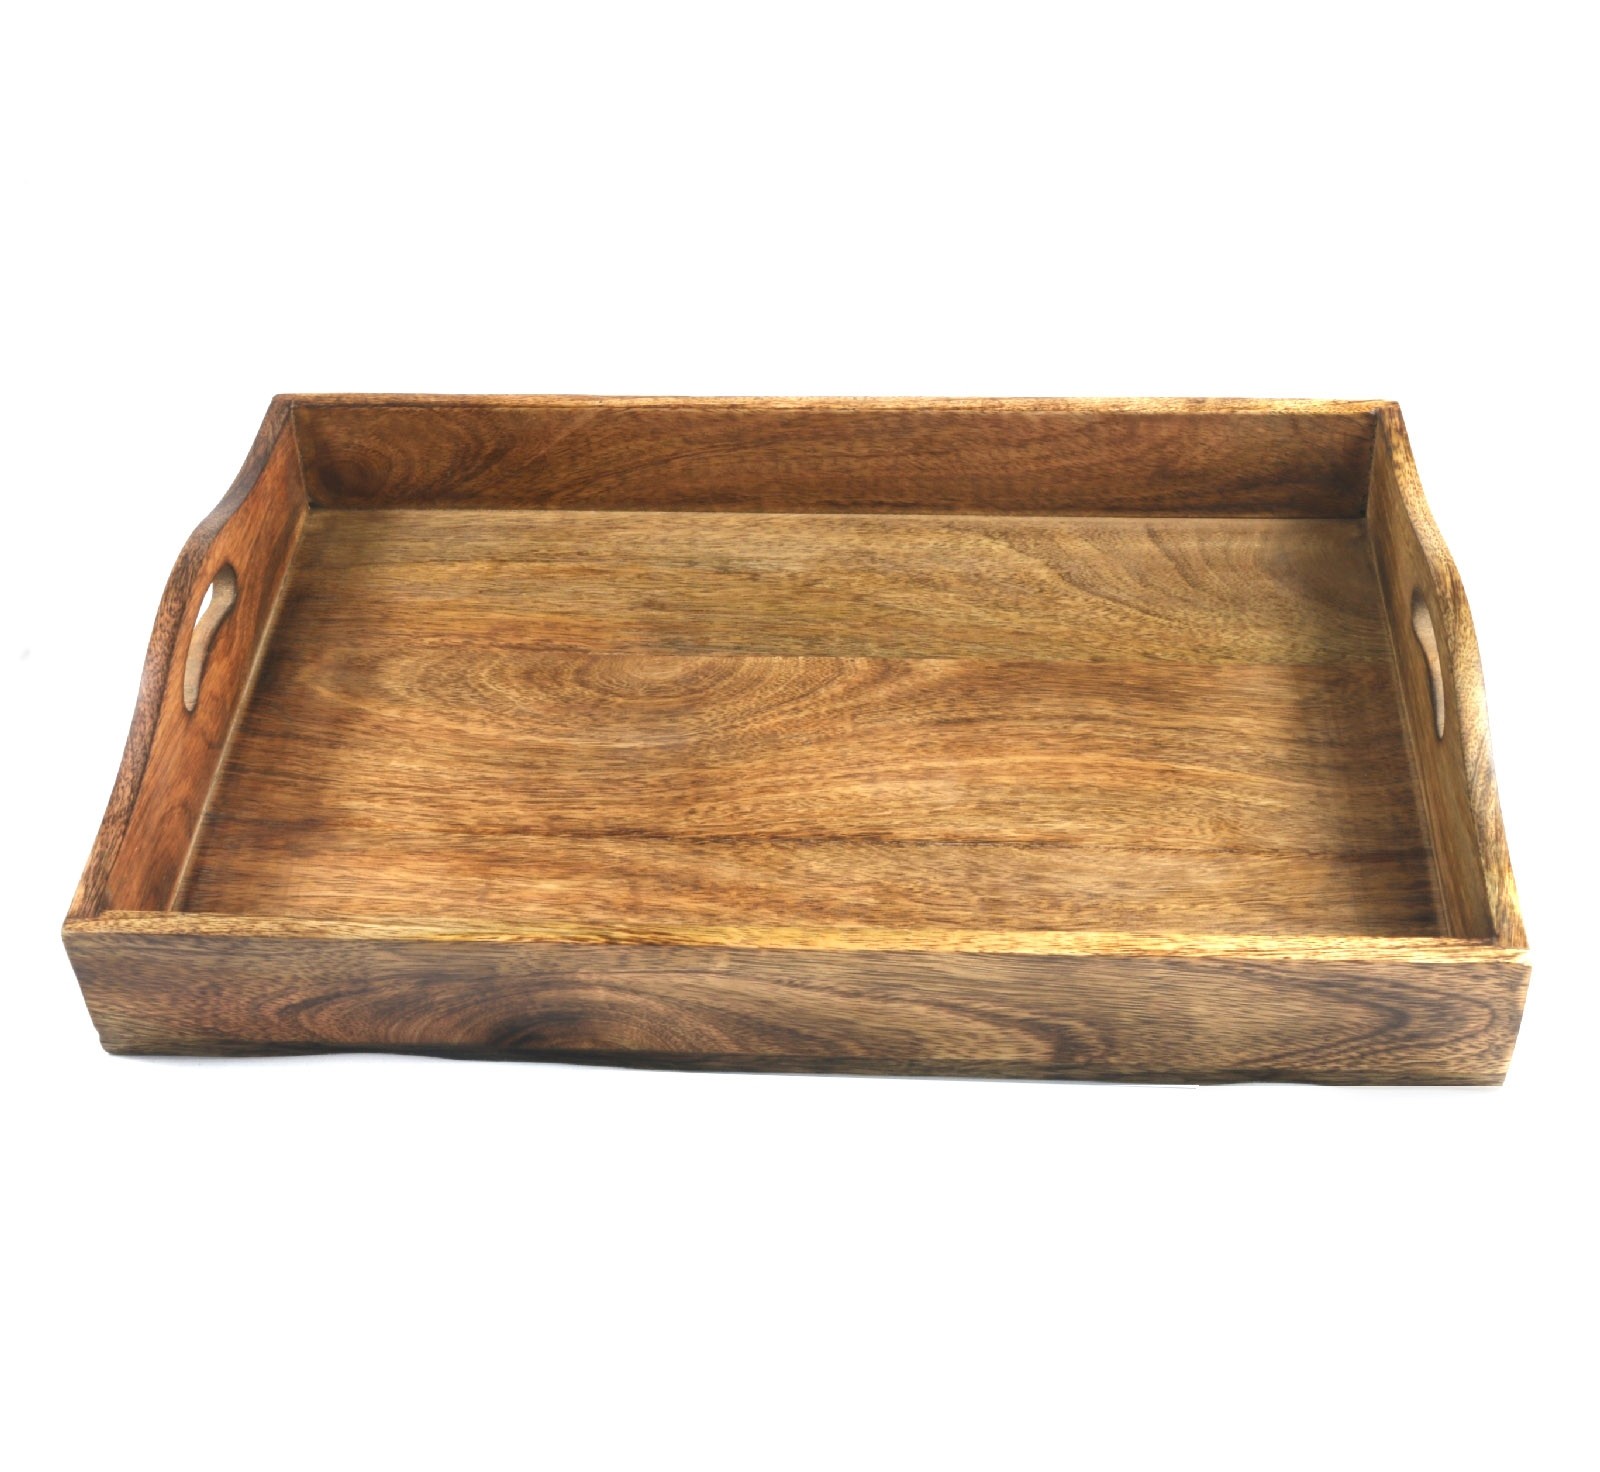 Wooden Plain Design Tray 46cm